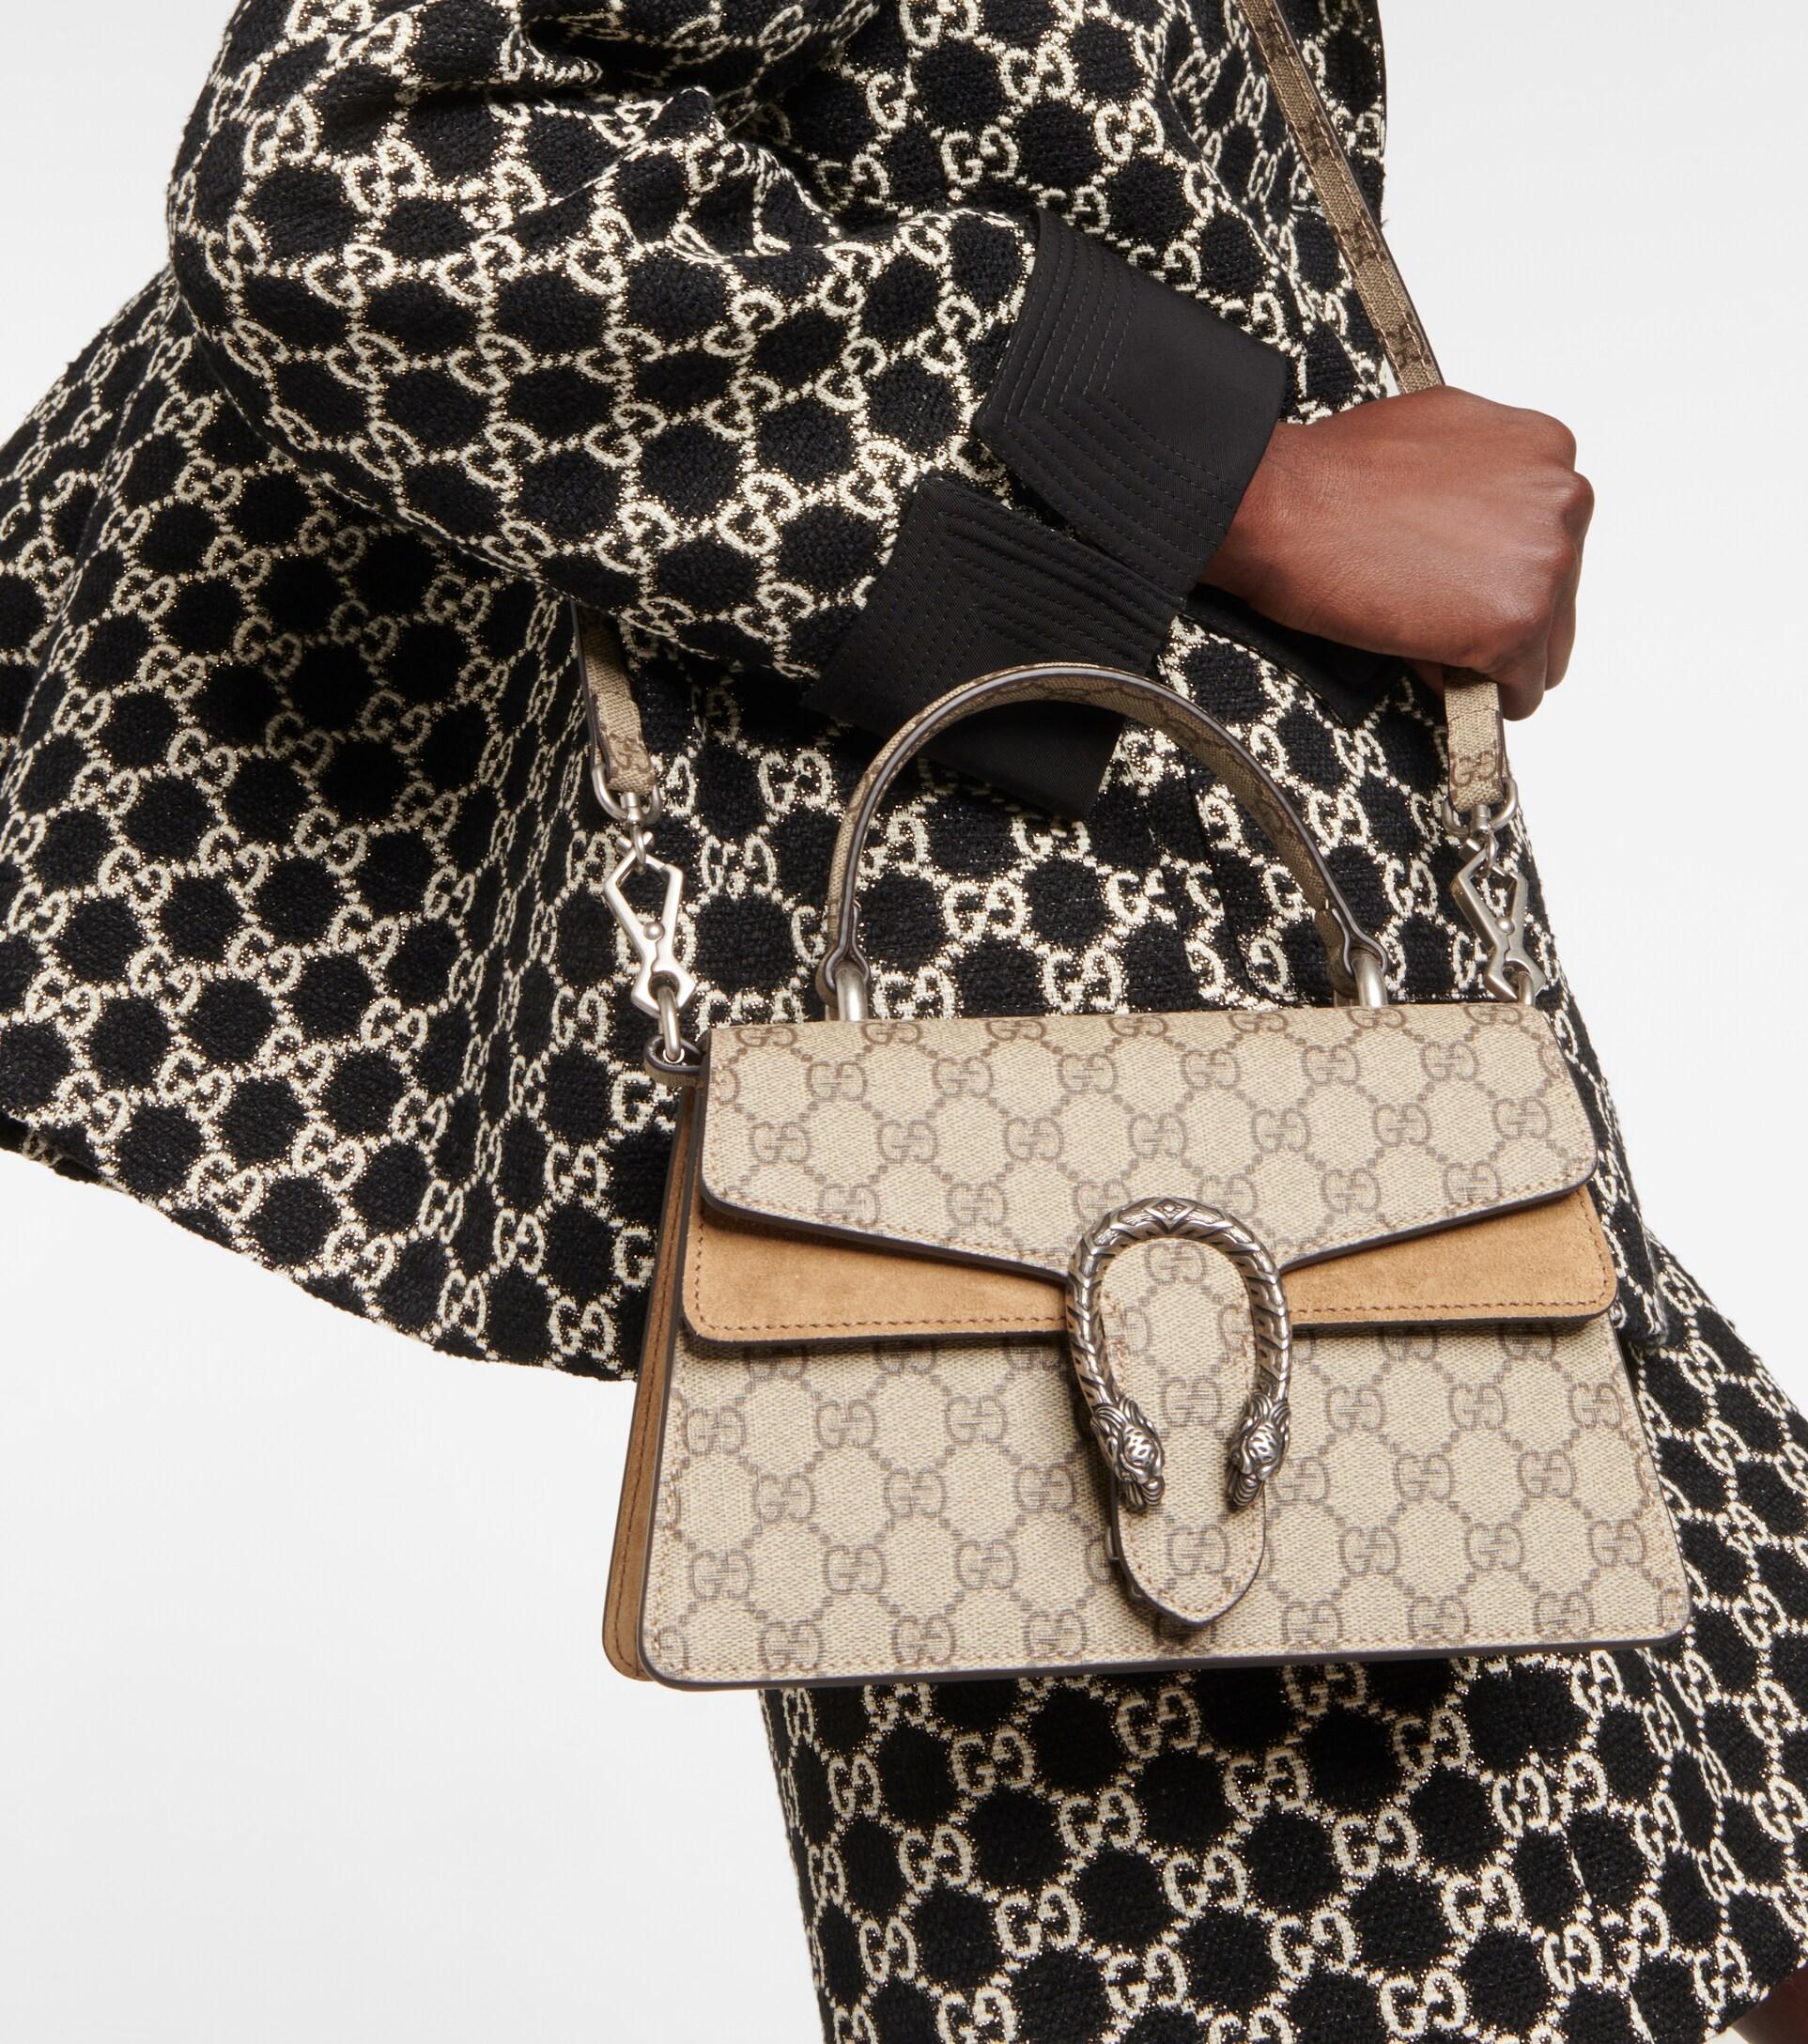 Gucci Dionysus Medium Canvas Shoulder Bag in Metallic